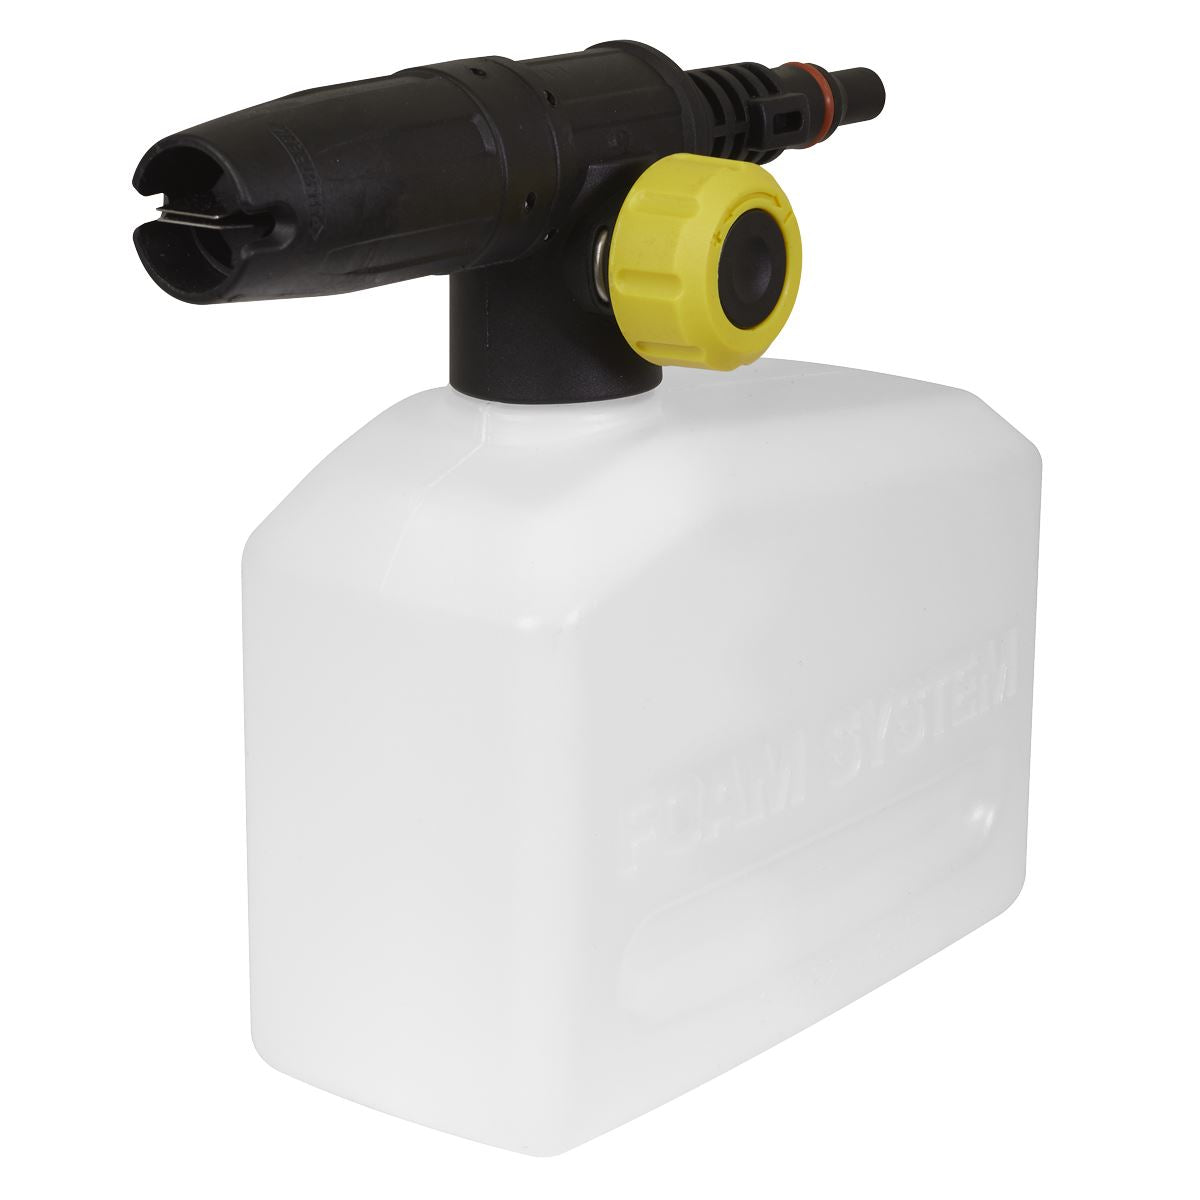 Sealey 110bar Pressure Washer with Snow Foam Sprayer Kit